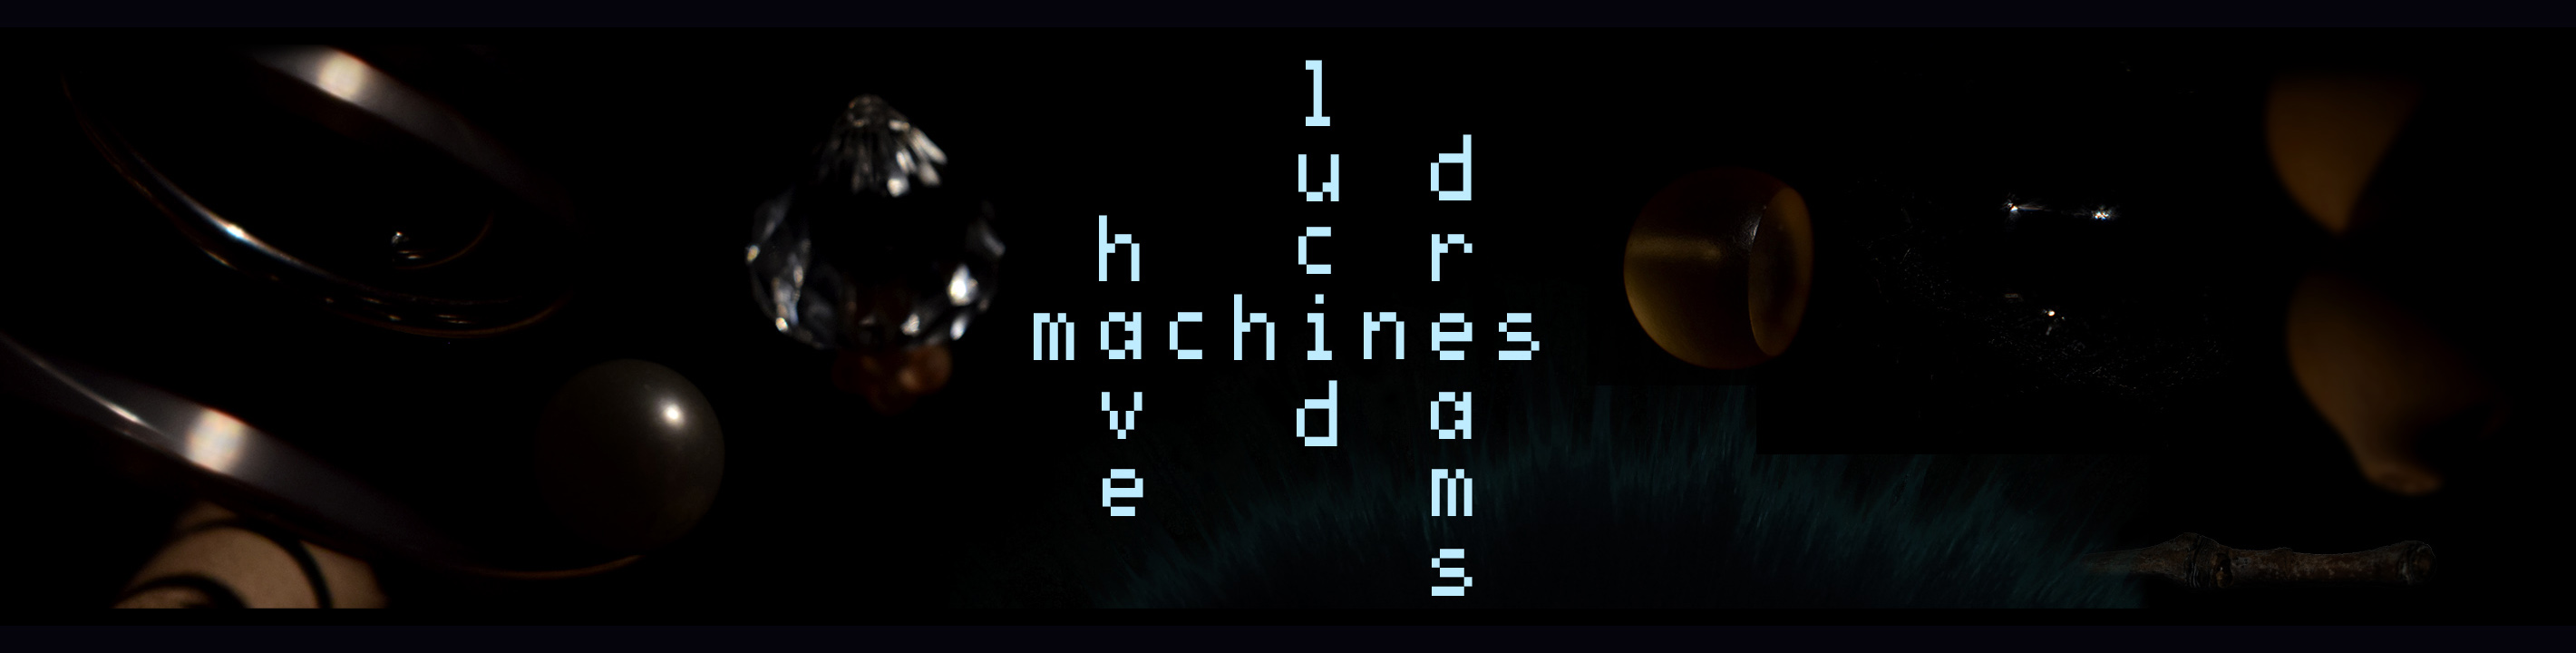 Machines Have Lucid Dreams